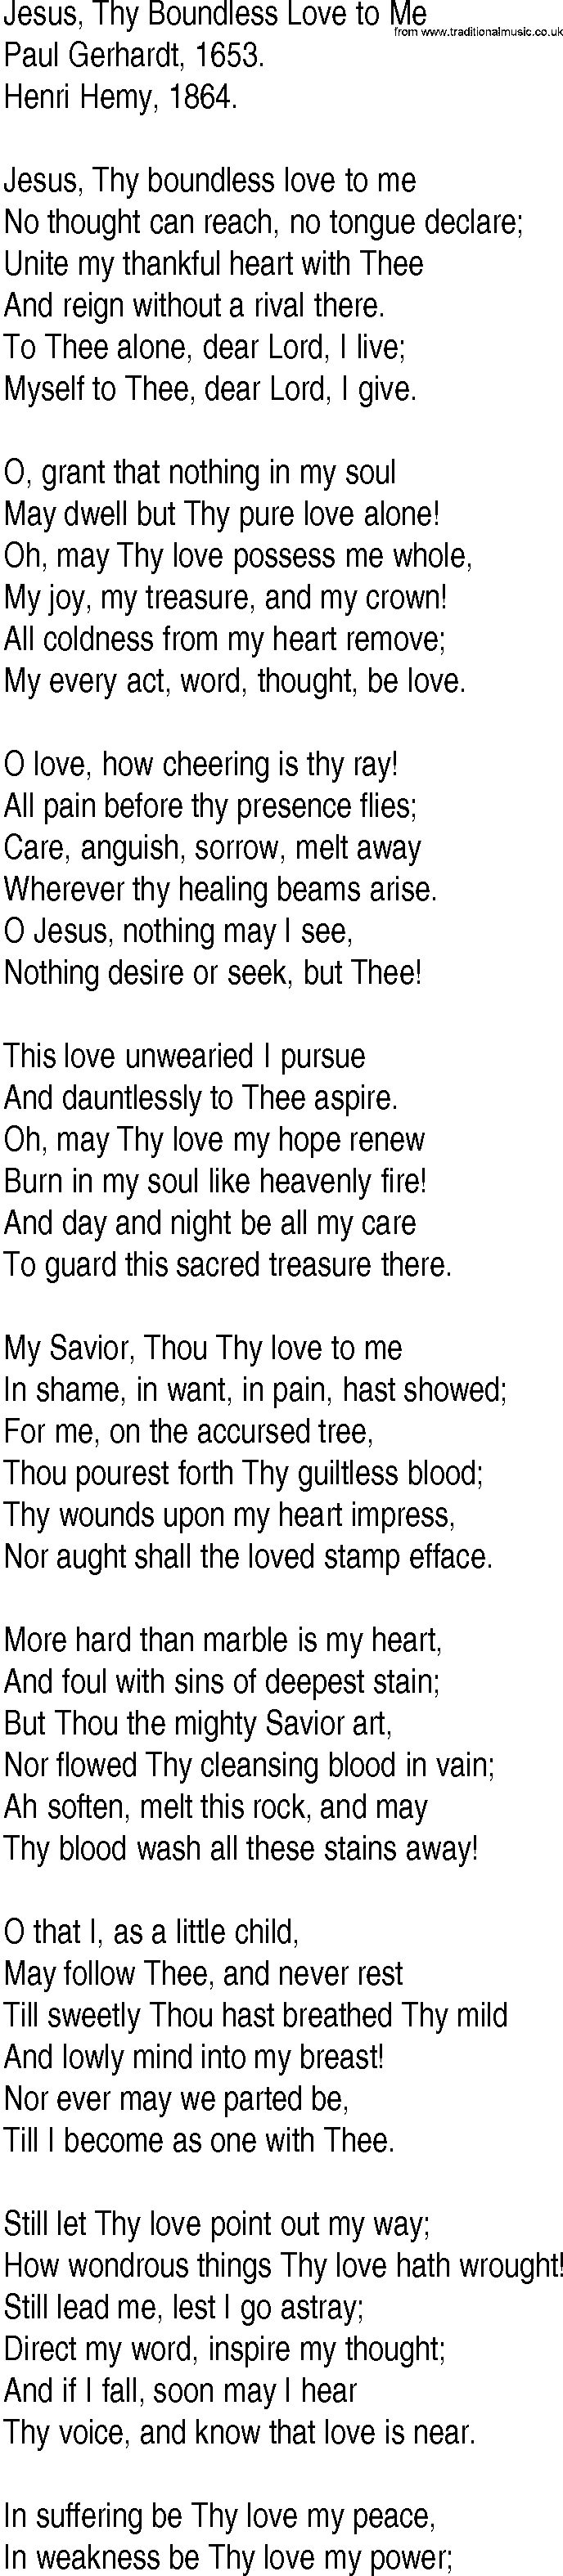 Hymn and Gospel Song: Jesus, Thy Boundless Love to Me by Paul Gerhardt lyrics